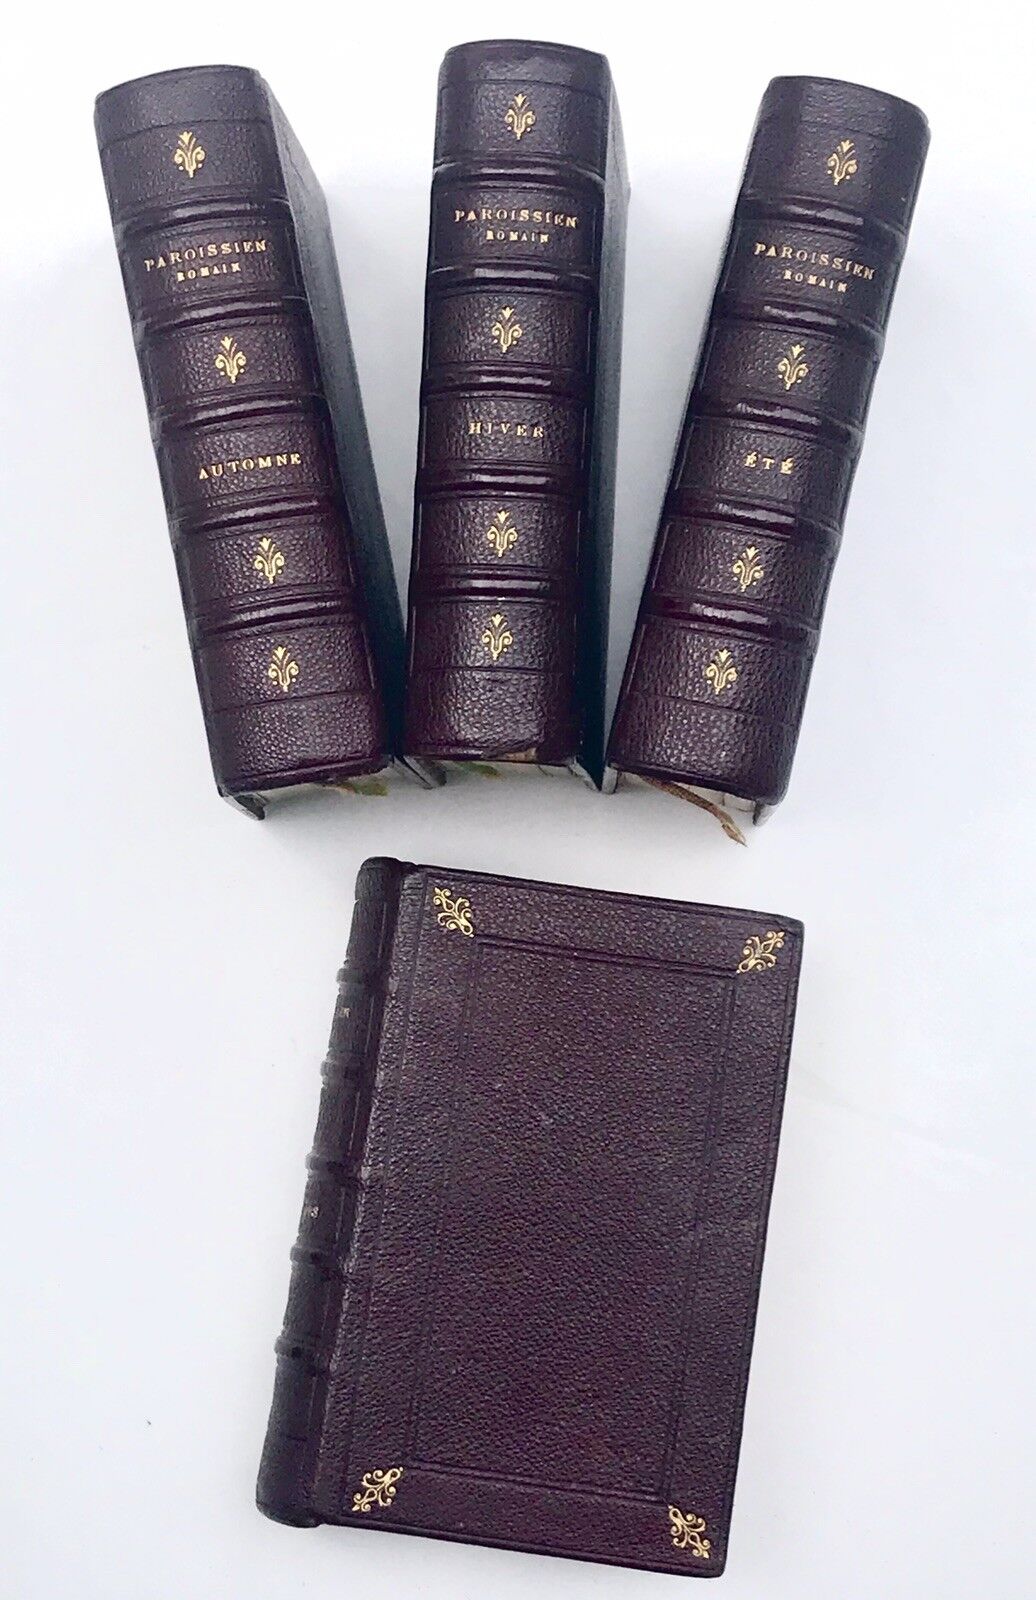 1875 ANTIQUE LEATHER PRAYERBOOK SET Paroissien Romain Bible Roman Parishioner